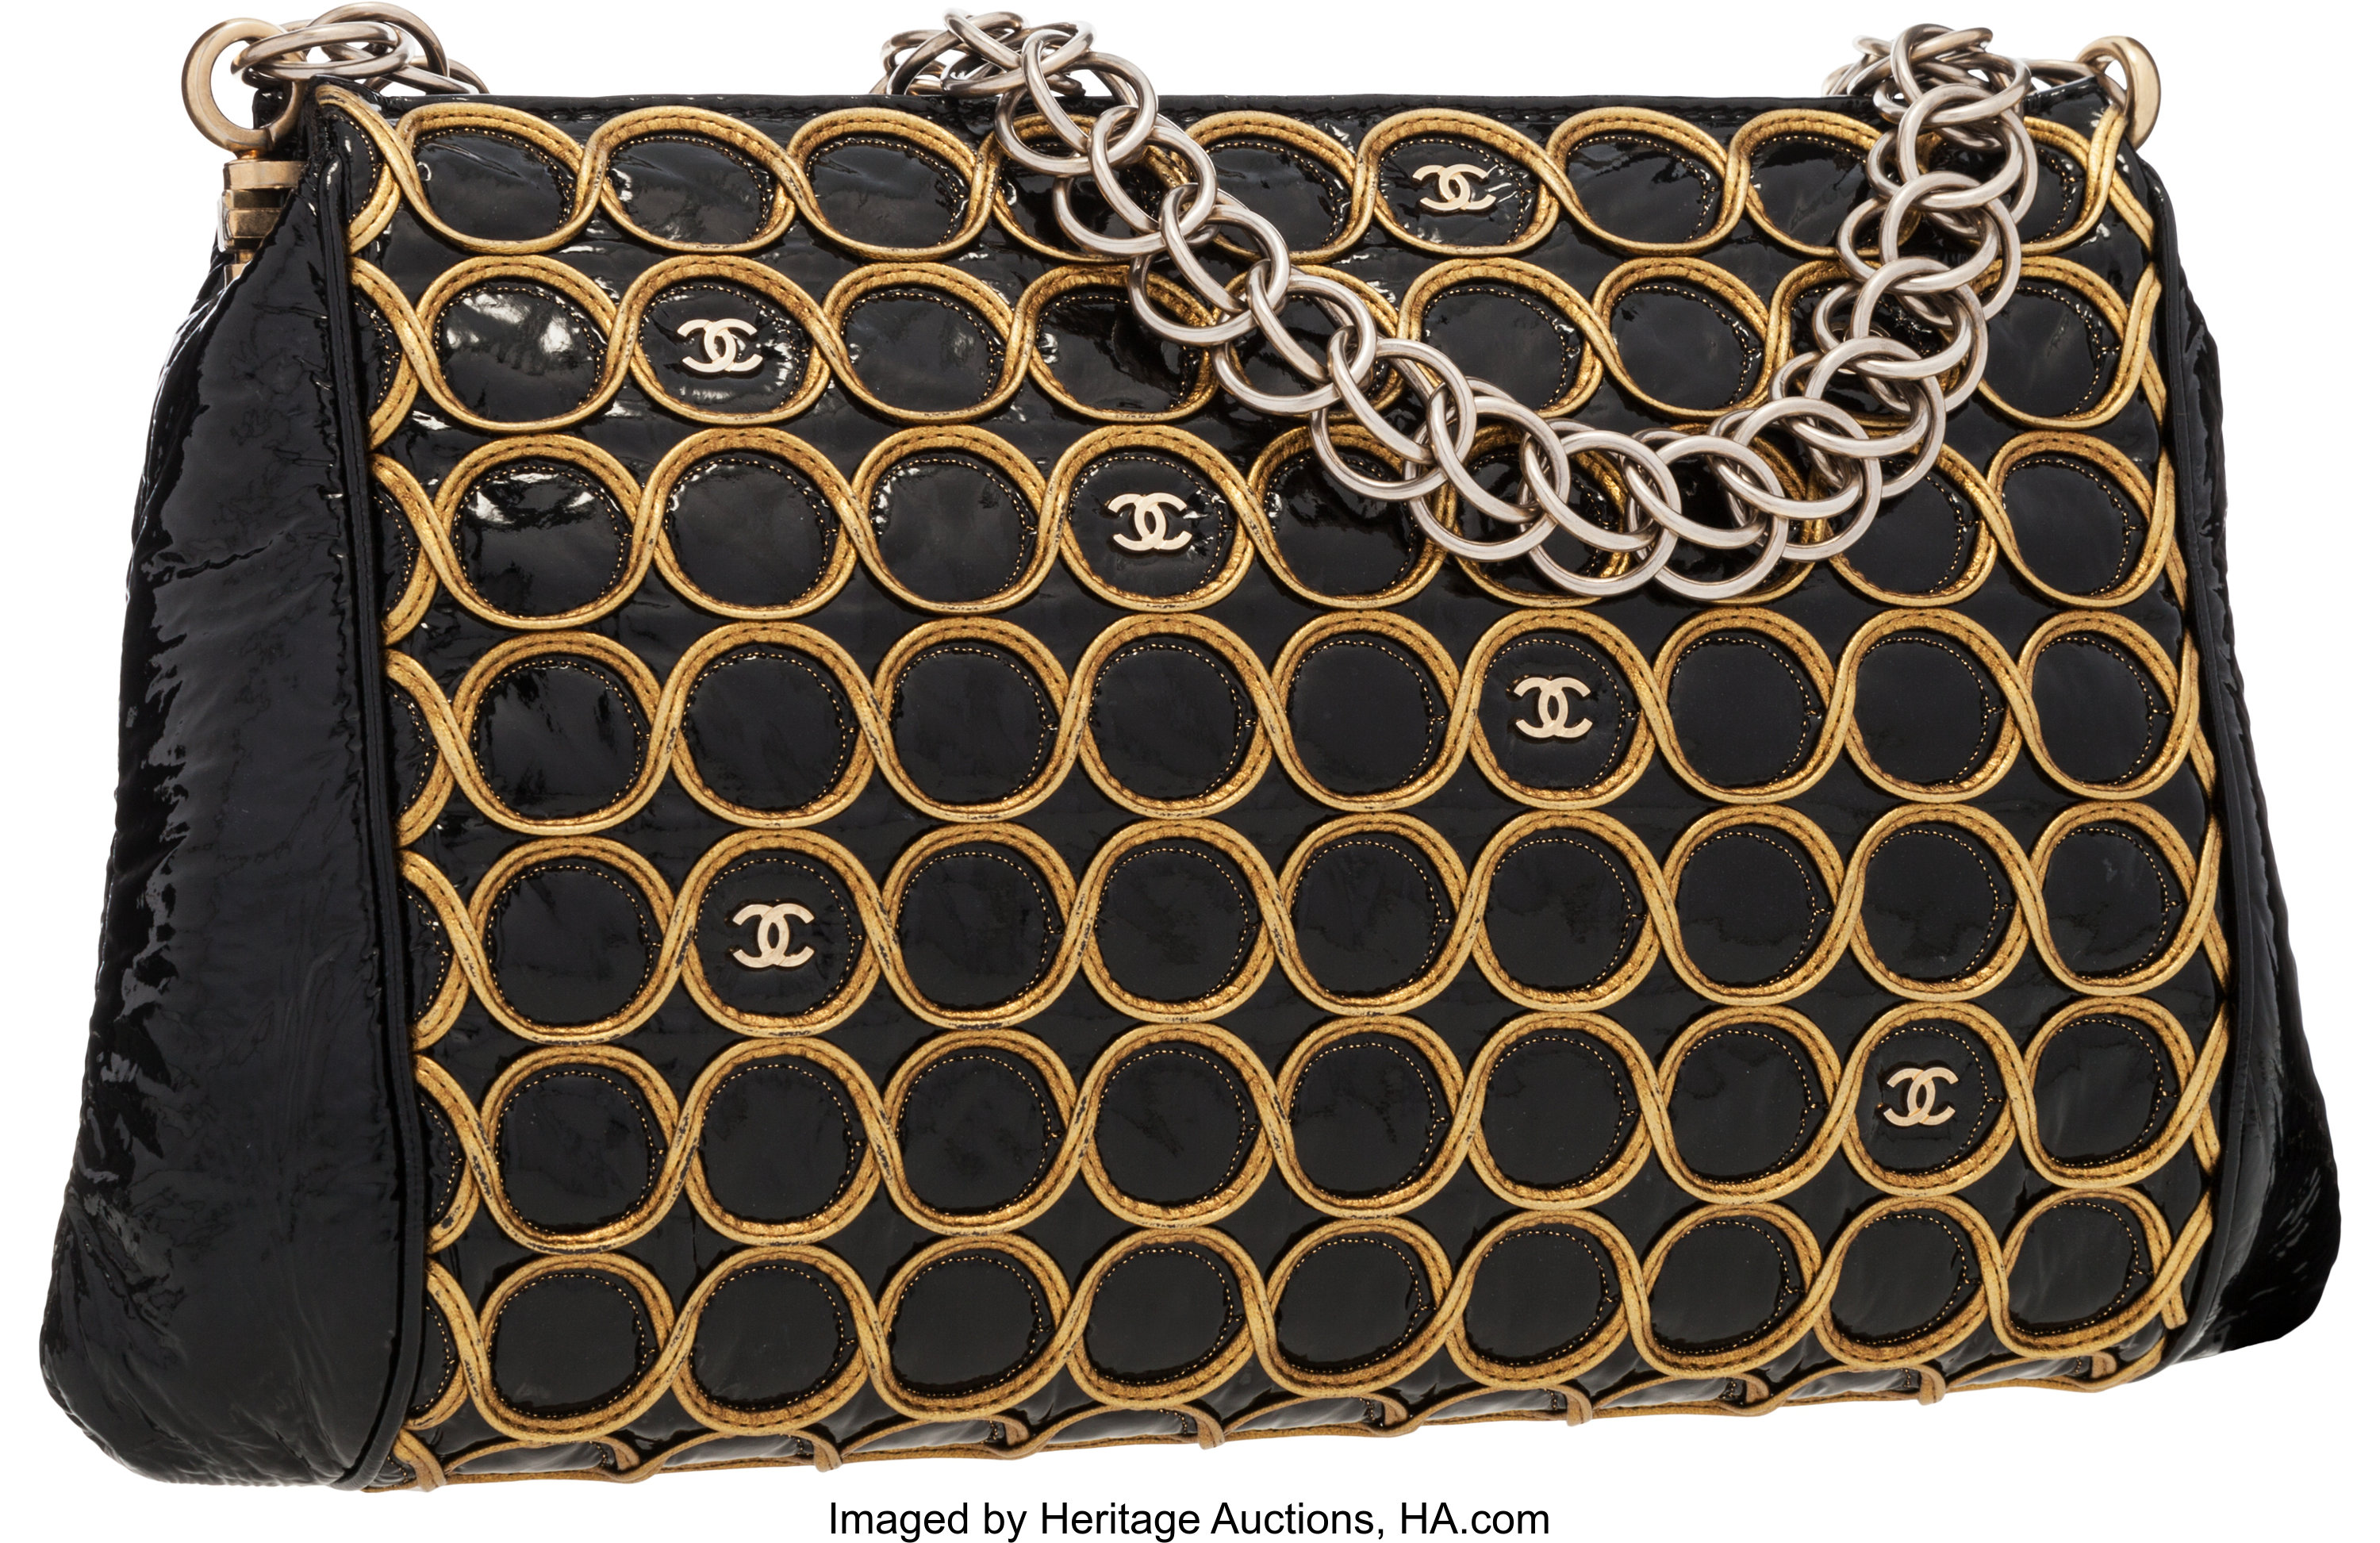 Chanel Dark Brown Fur Chain Shoulder Bag Chanel